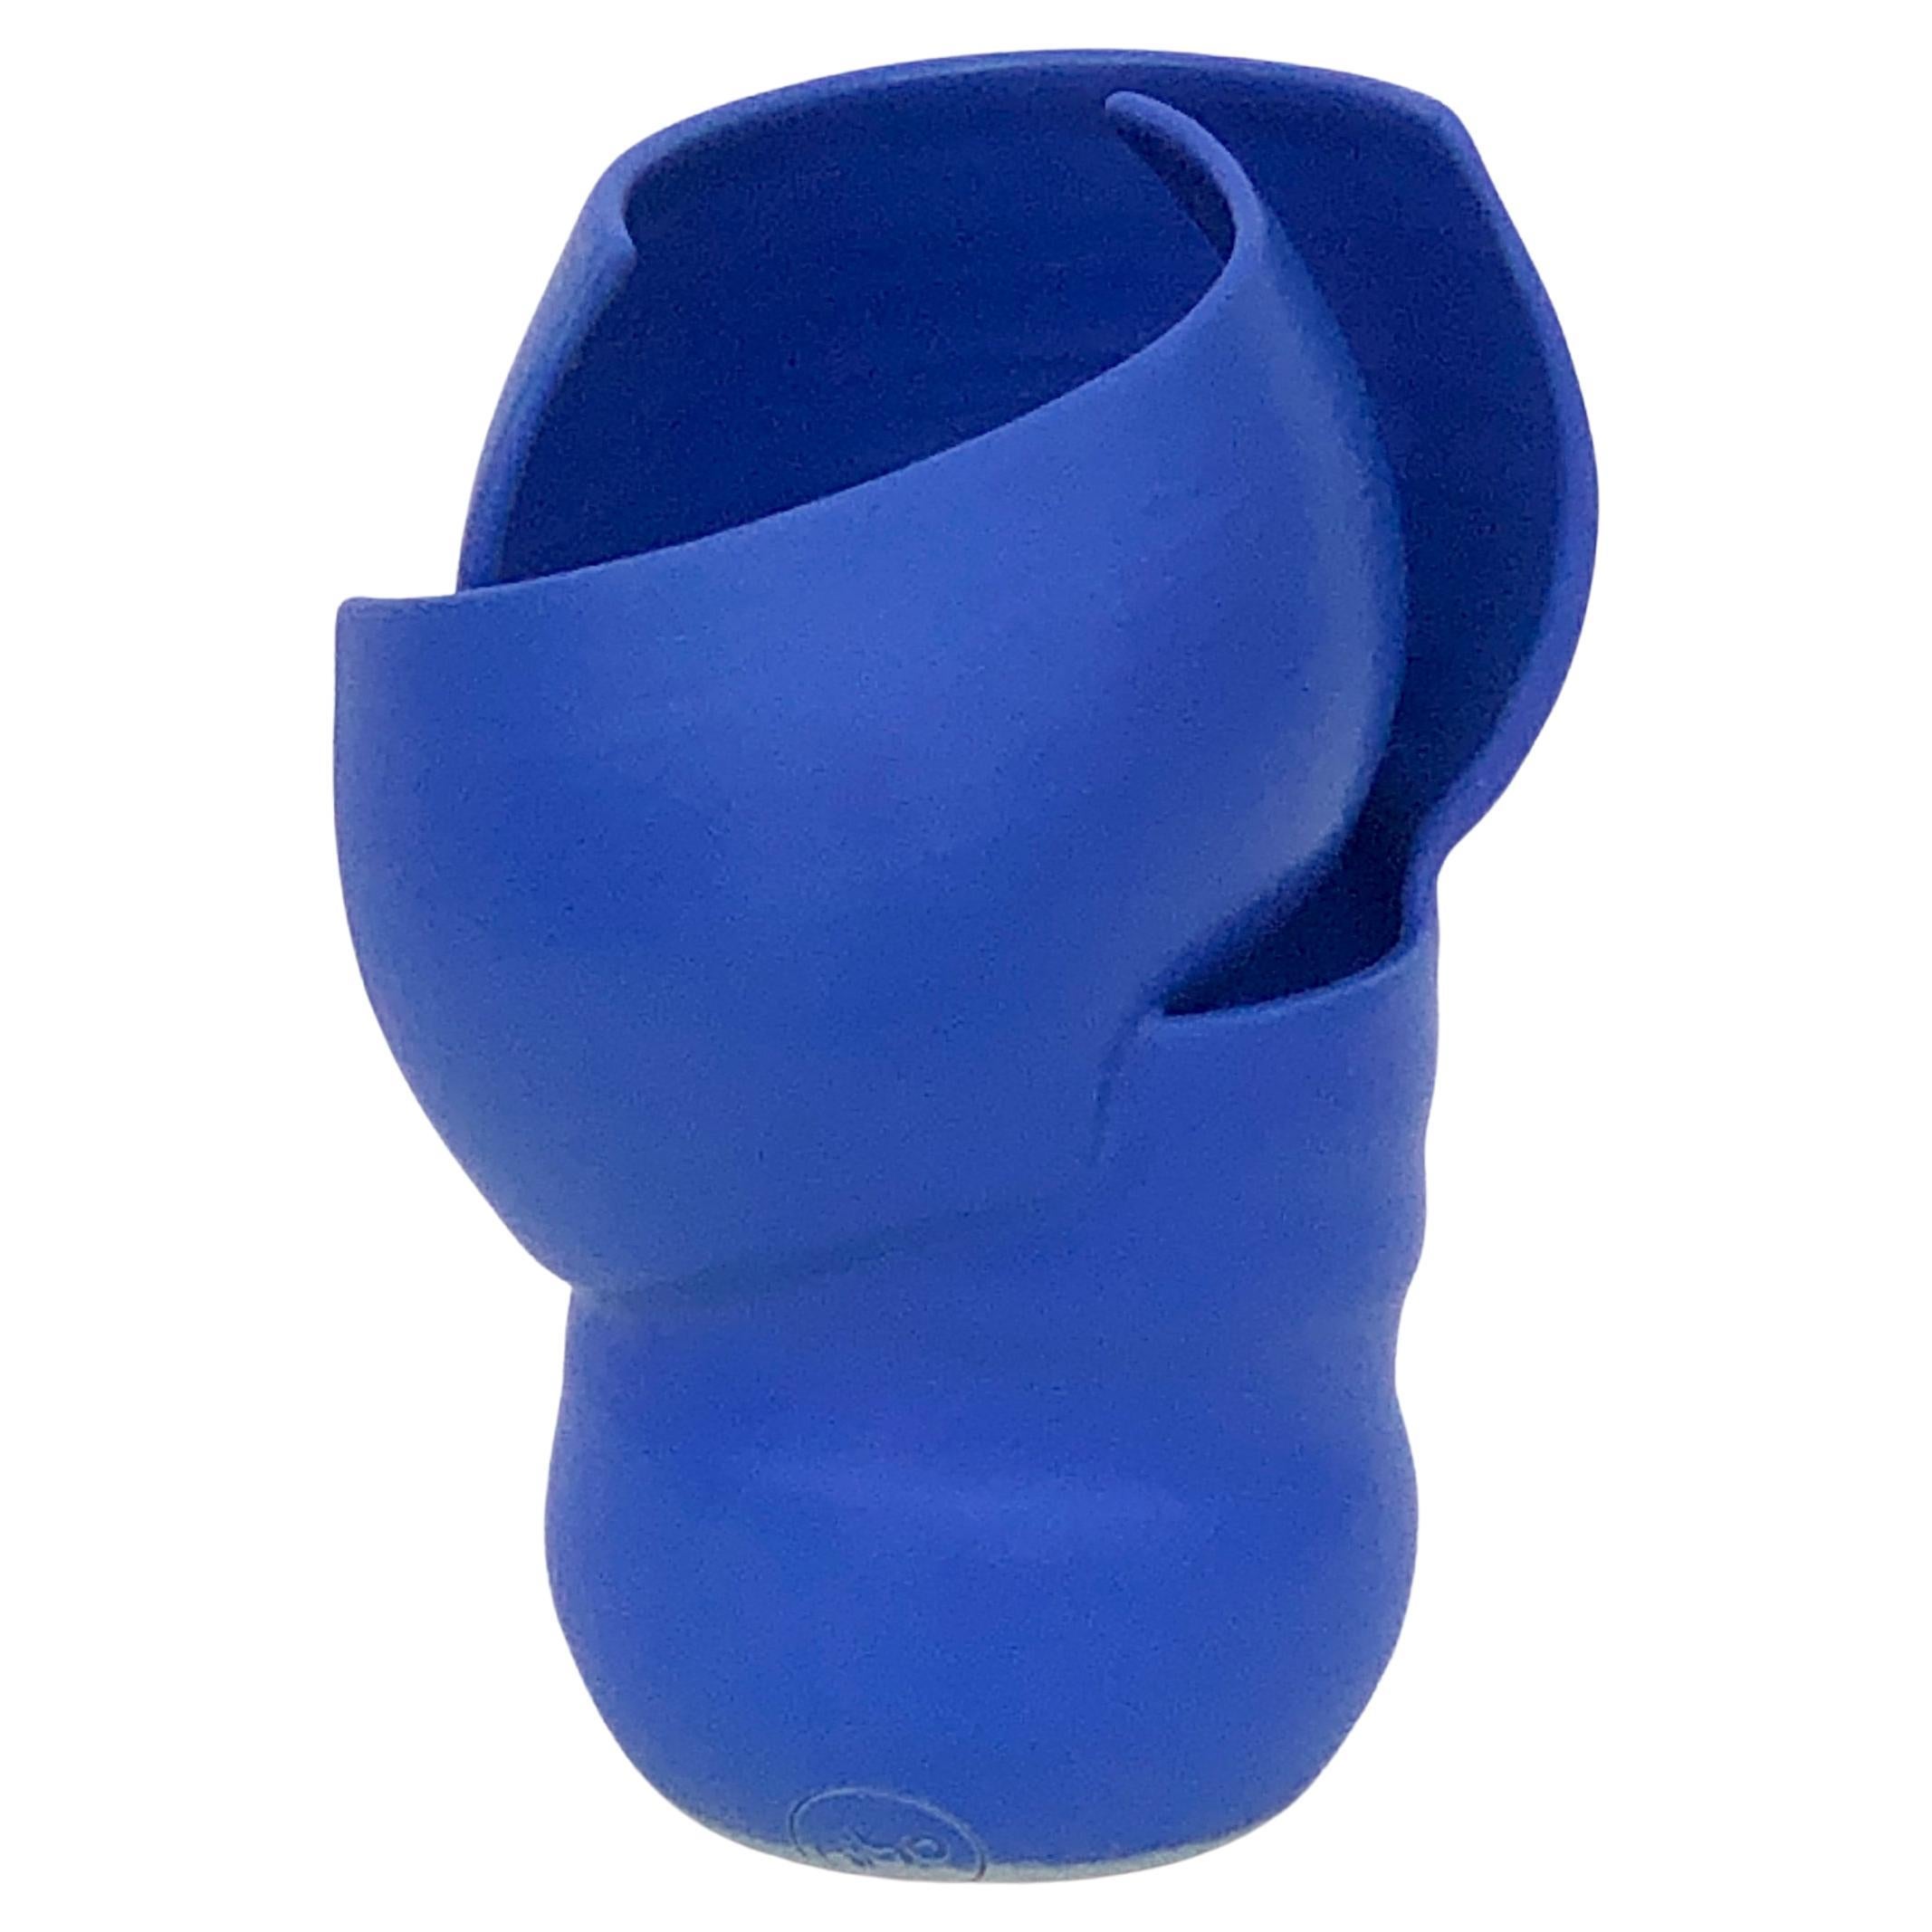 Helix-Vase in Electric Blue, handgefertigt in Barcelona von niho Ceramics